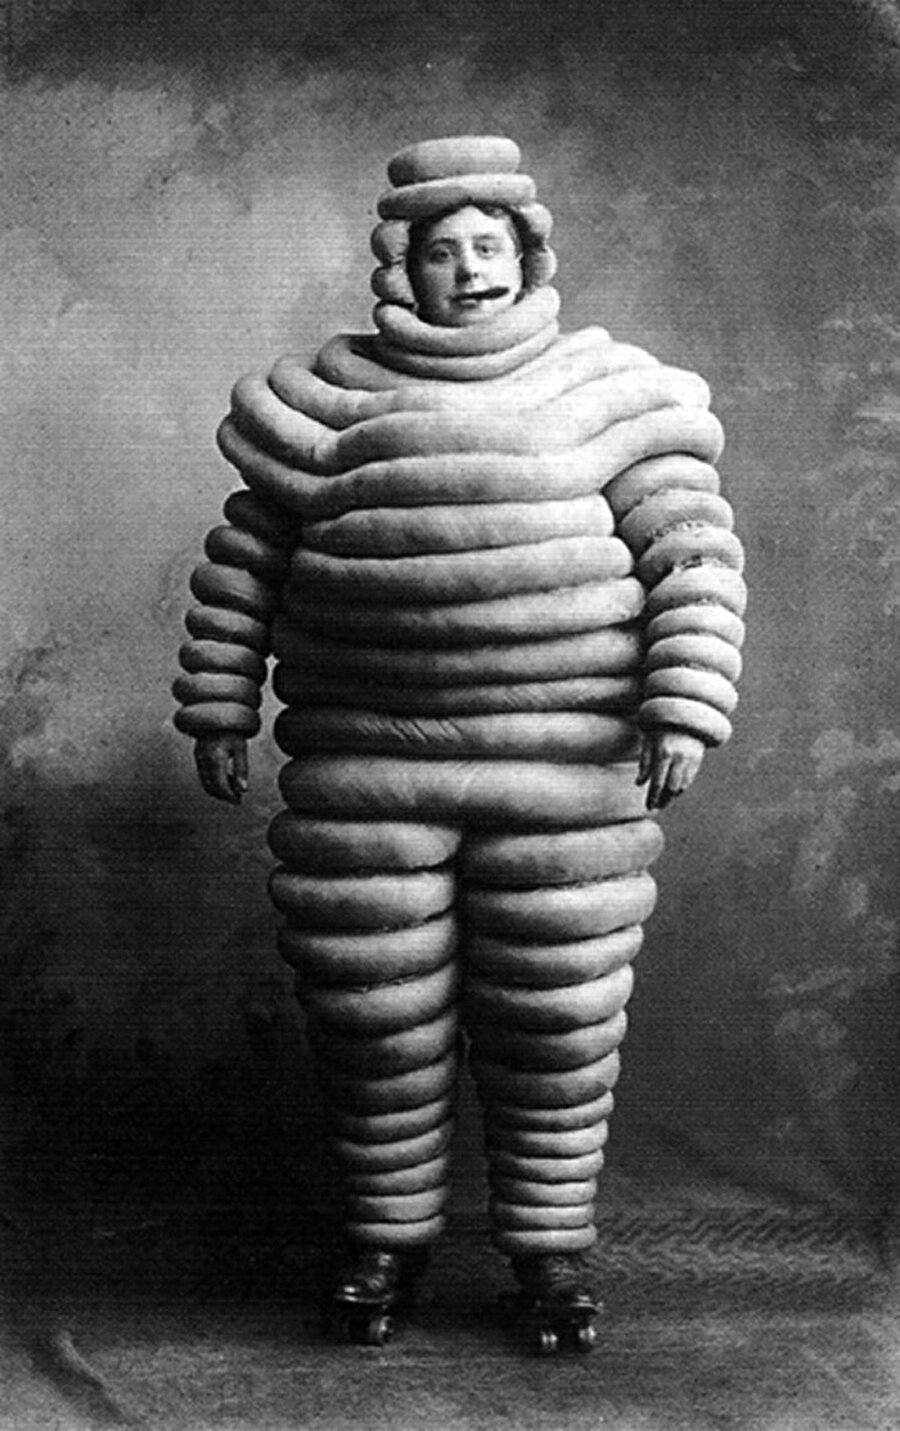 Orijinal Michelin, 1910

                                    
                                